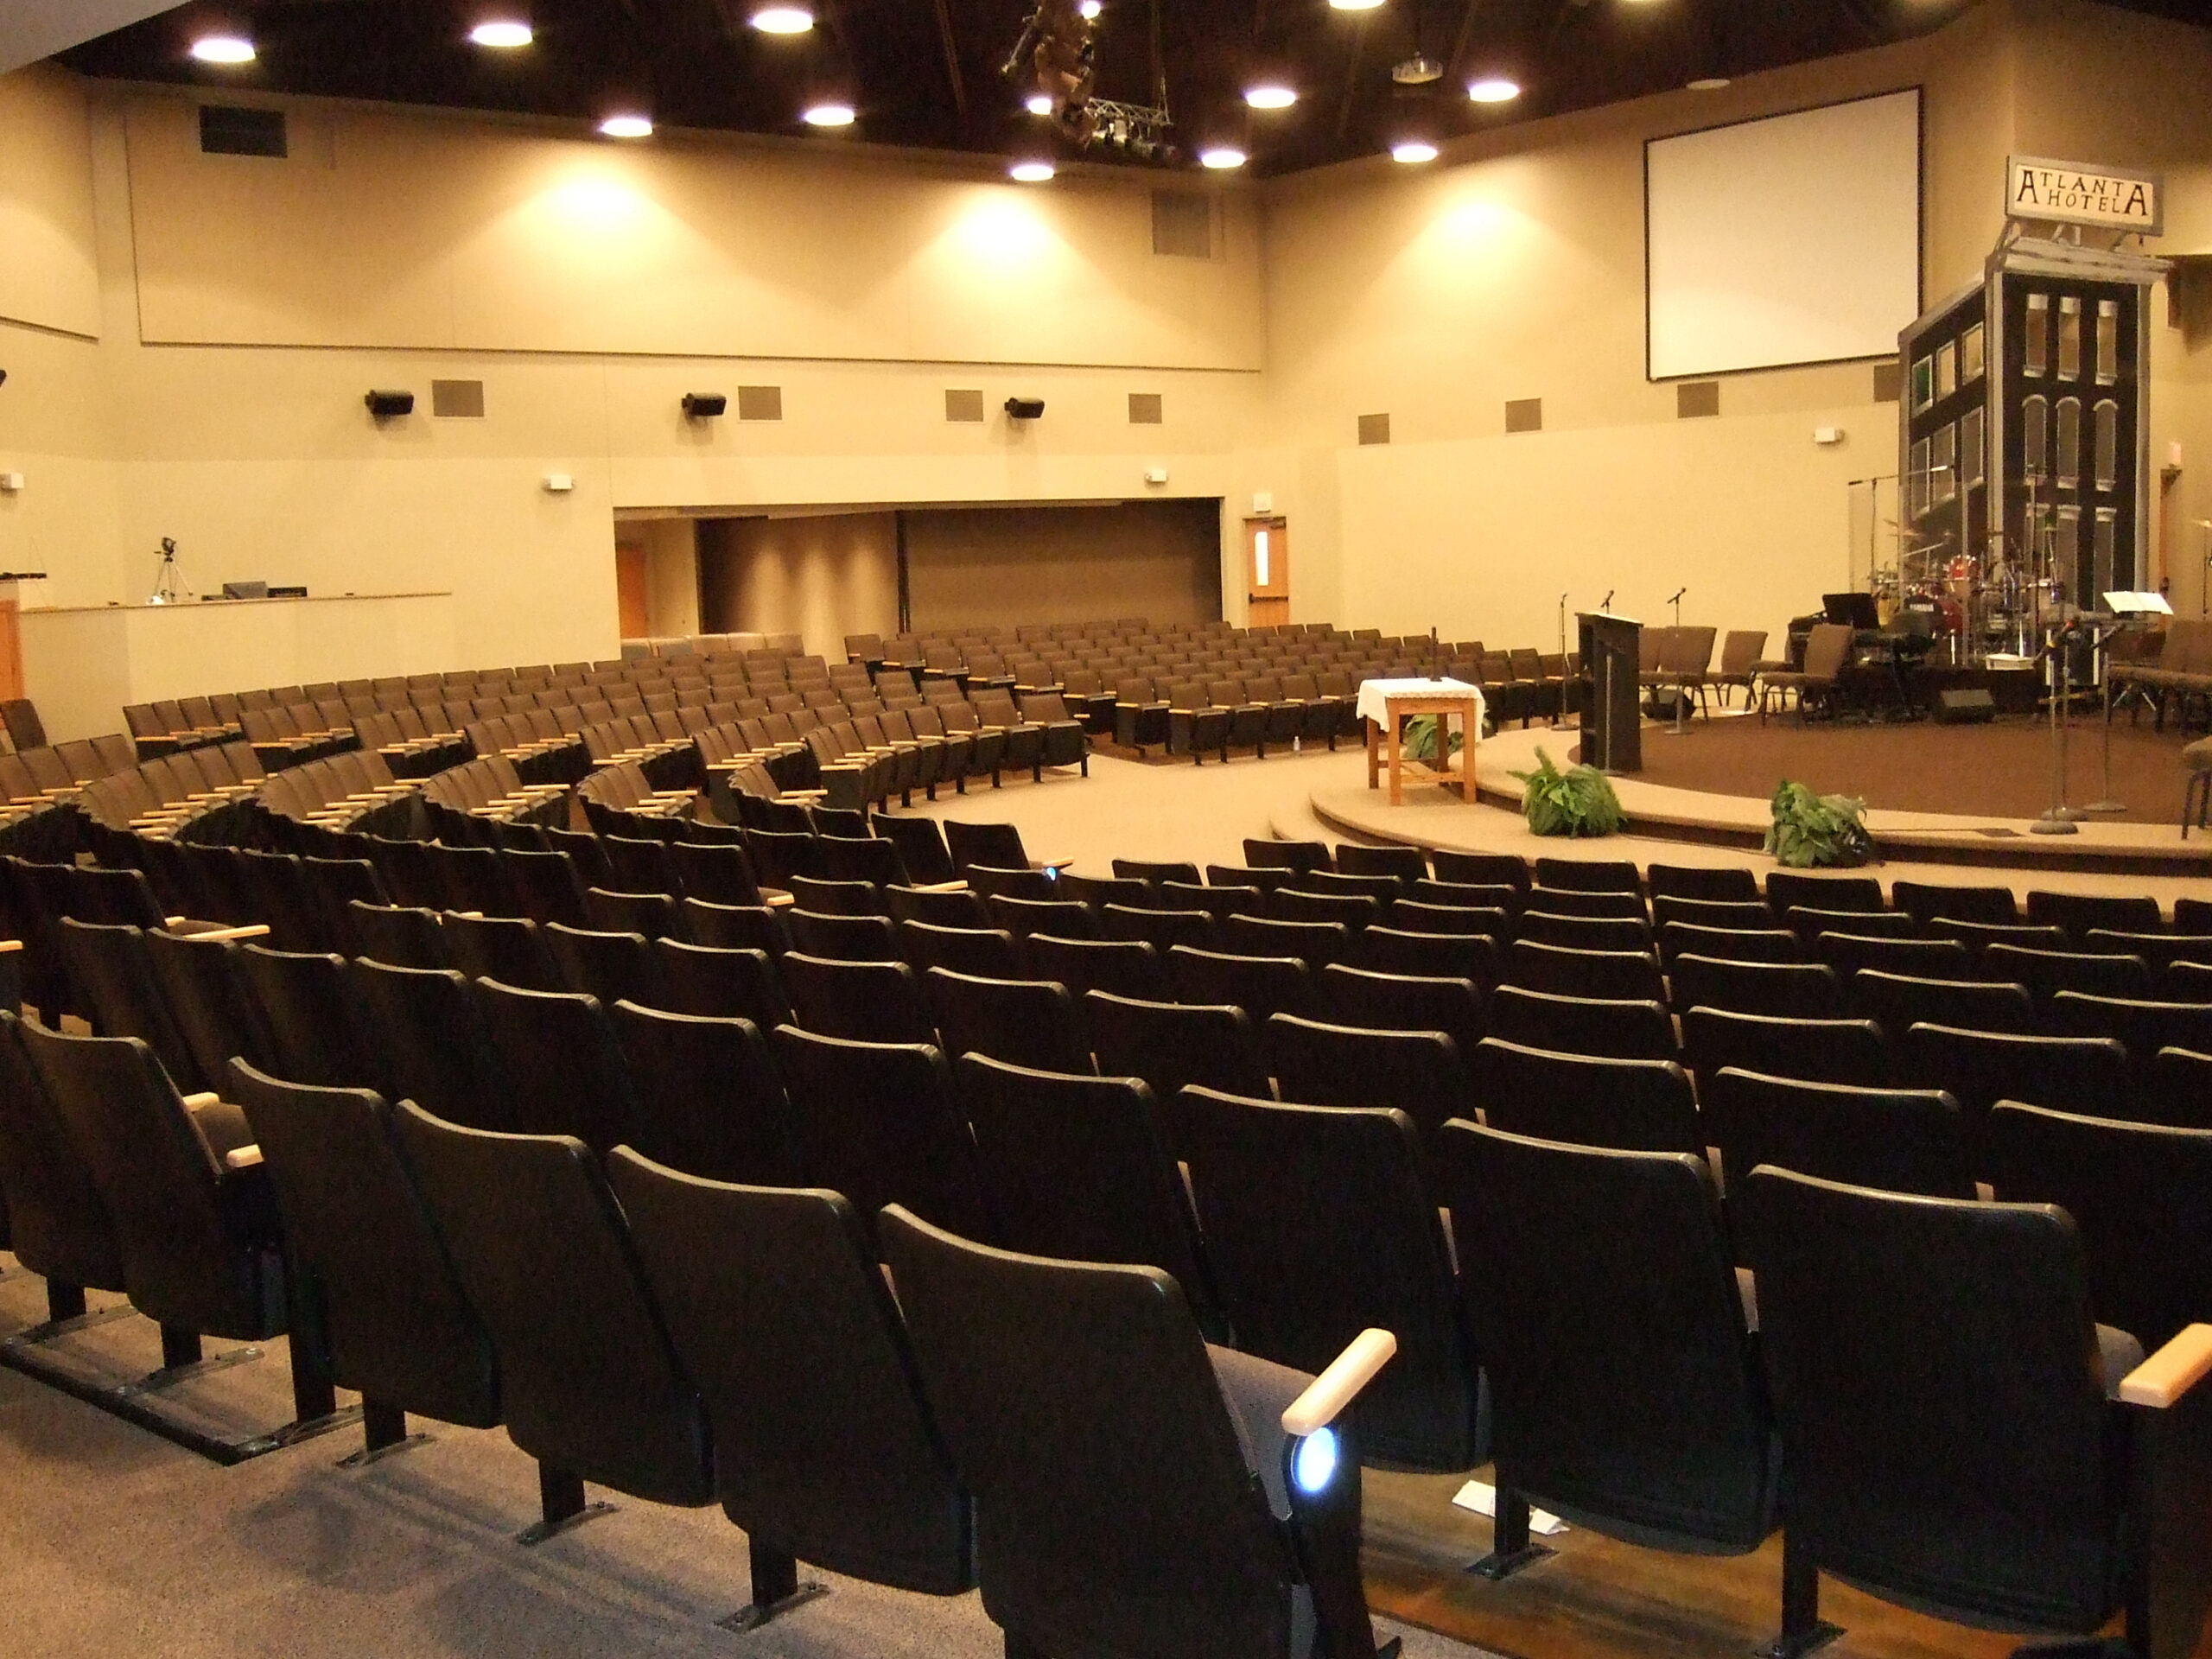 Christ Community Church | Community Loudspeakers From Biamp